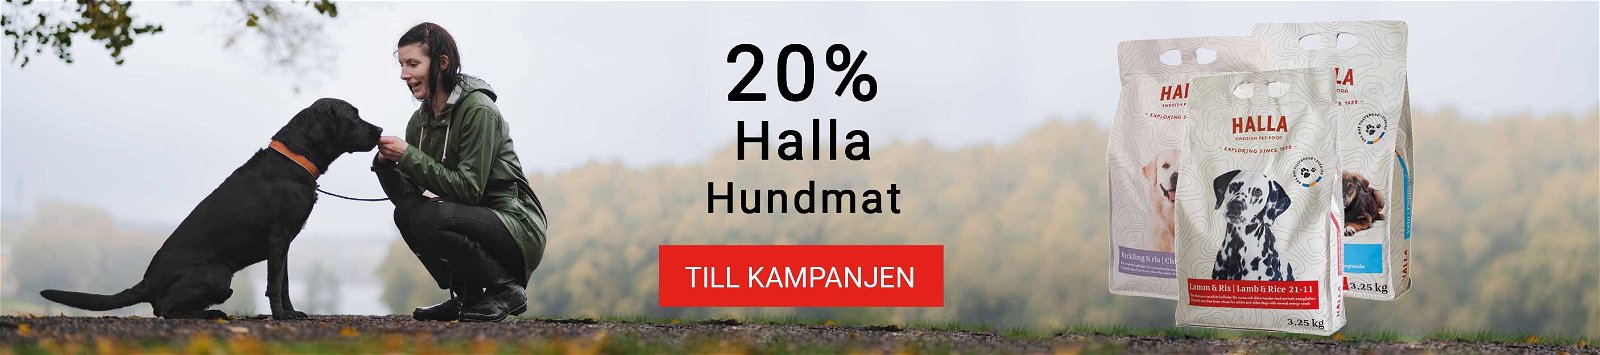 Kampanj Halla 20%